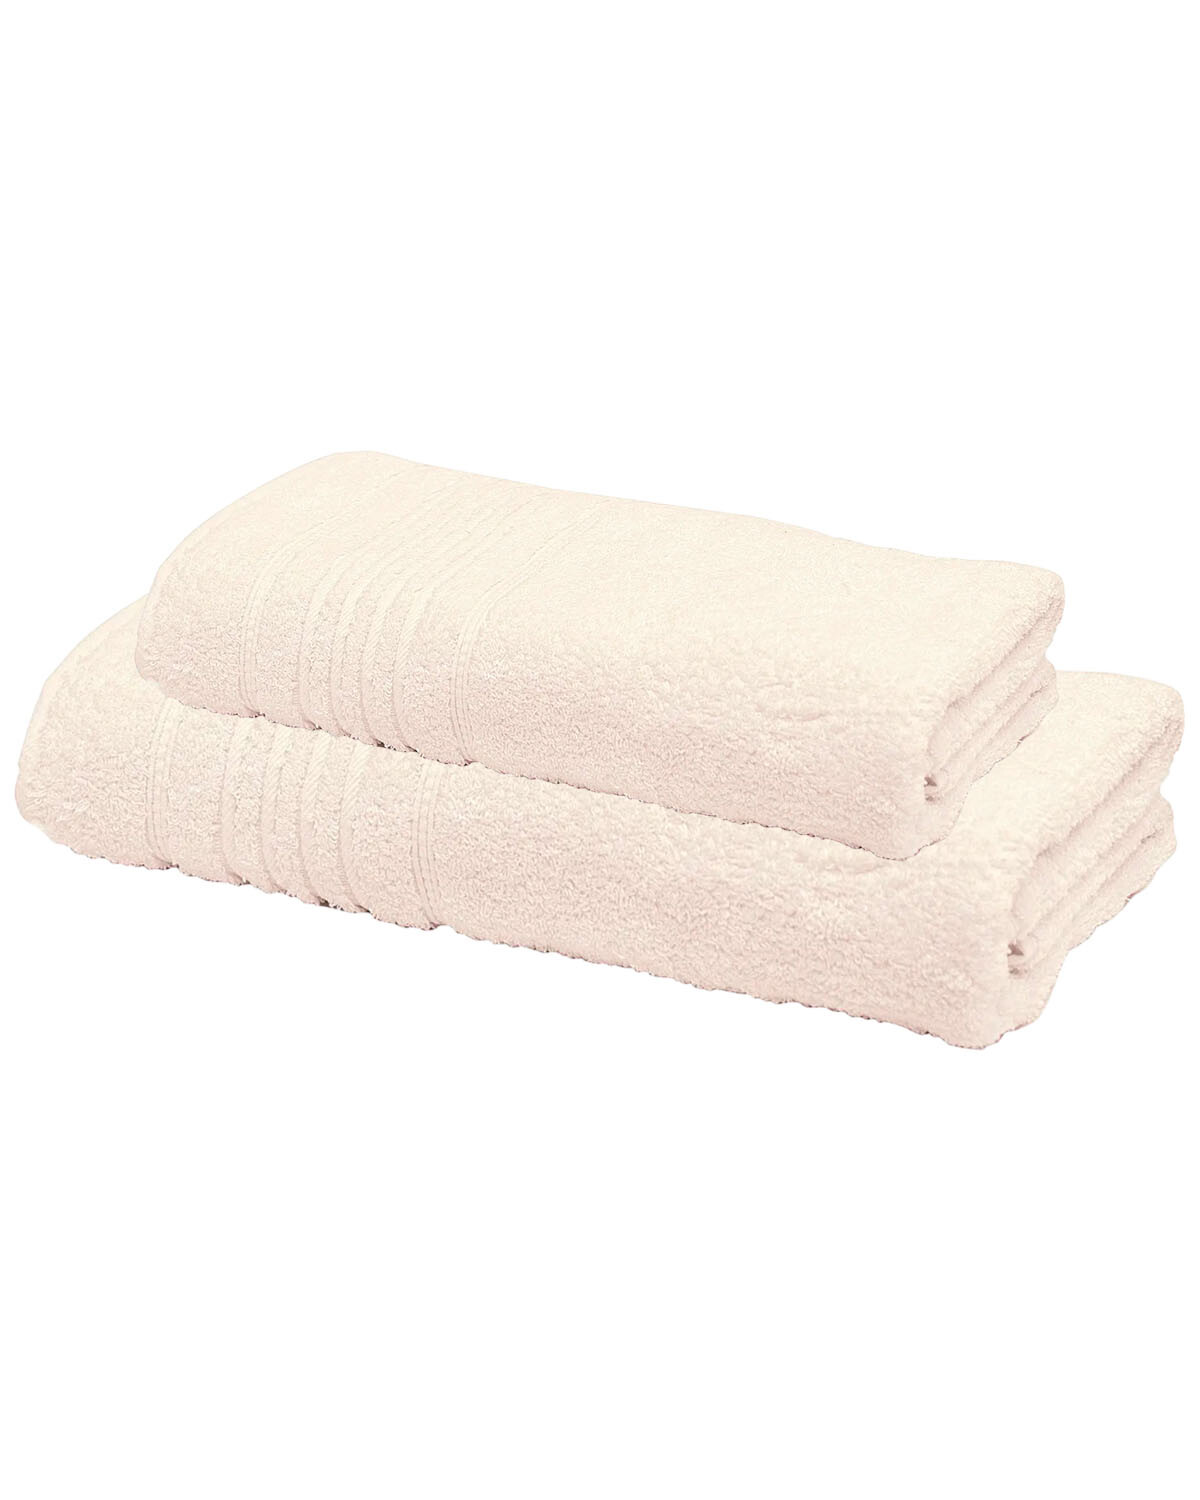 Toalla de baño Rubi 100% algodón egipcio 500 gramos Beige